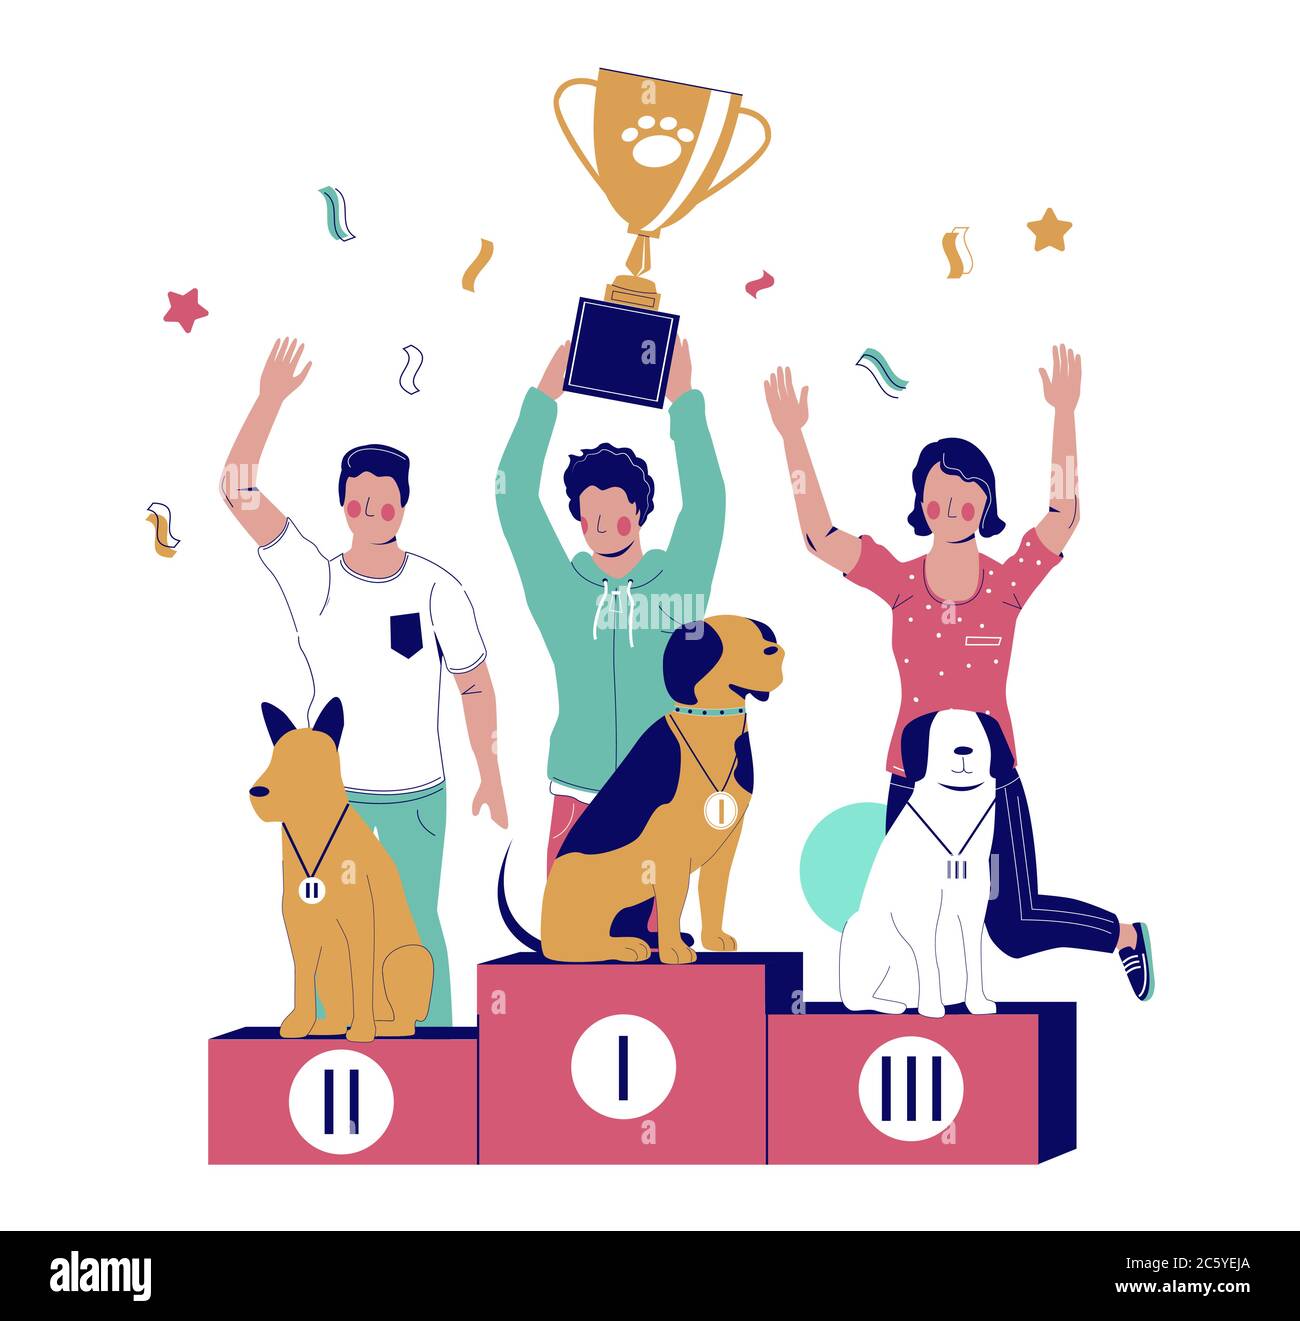 Dog contest vector flat style design illustration Stock Vector